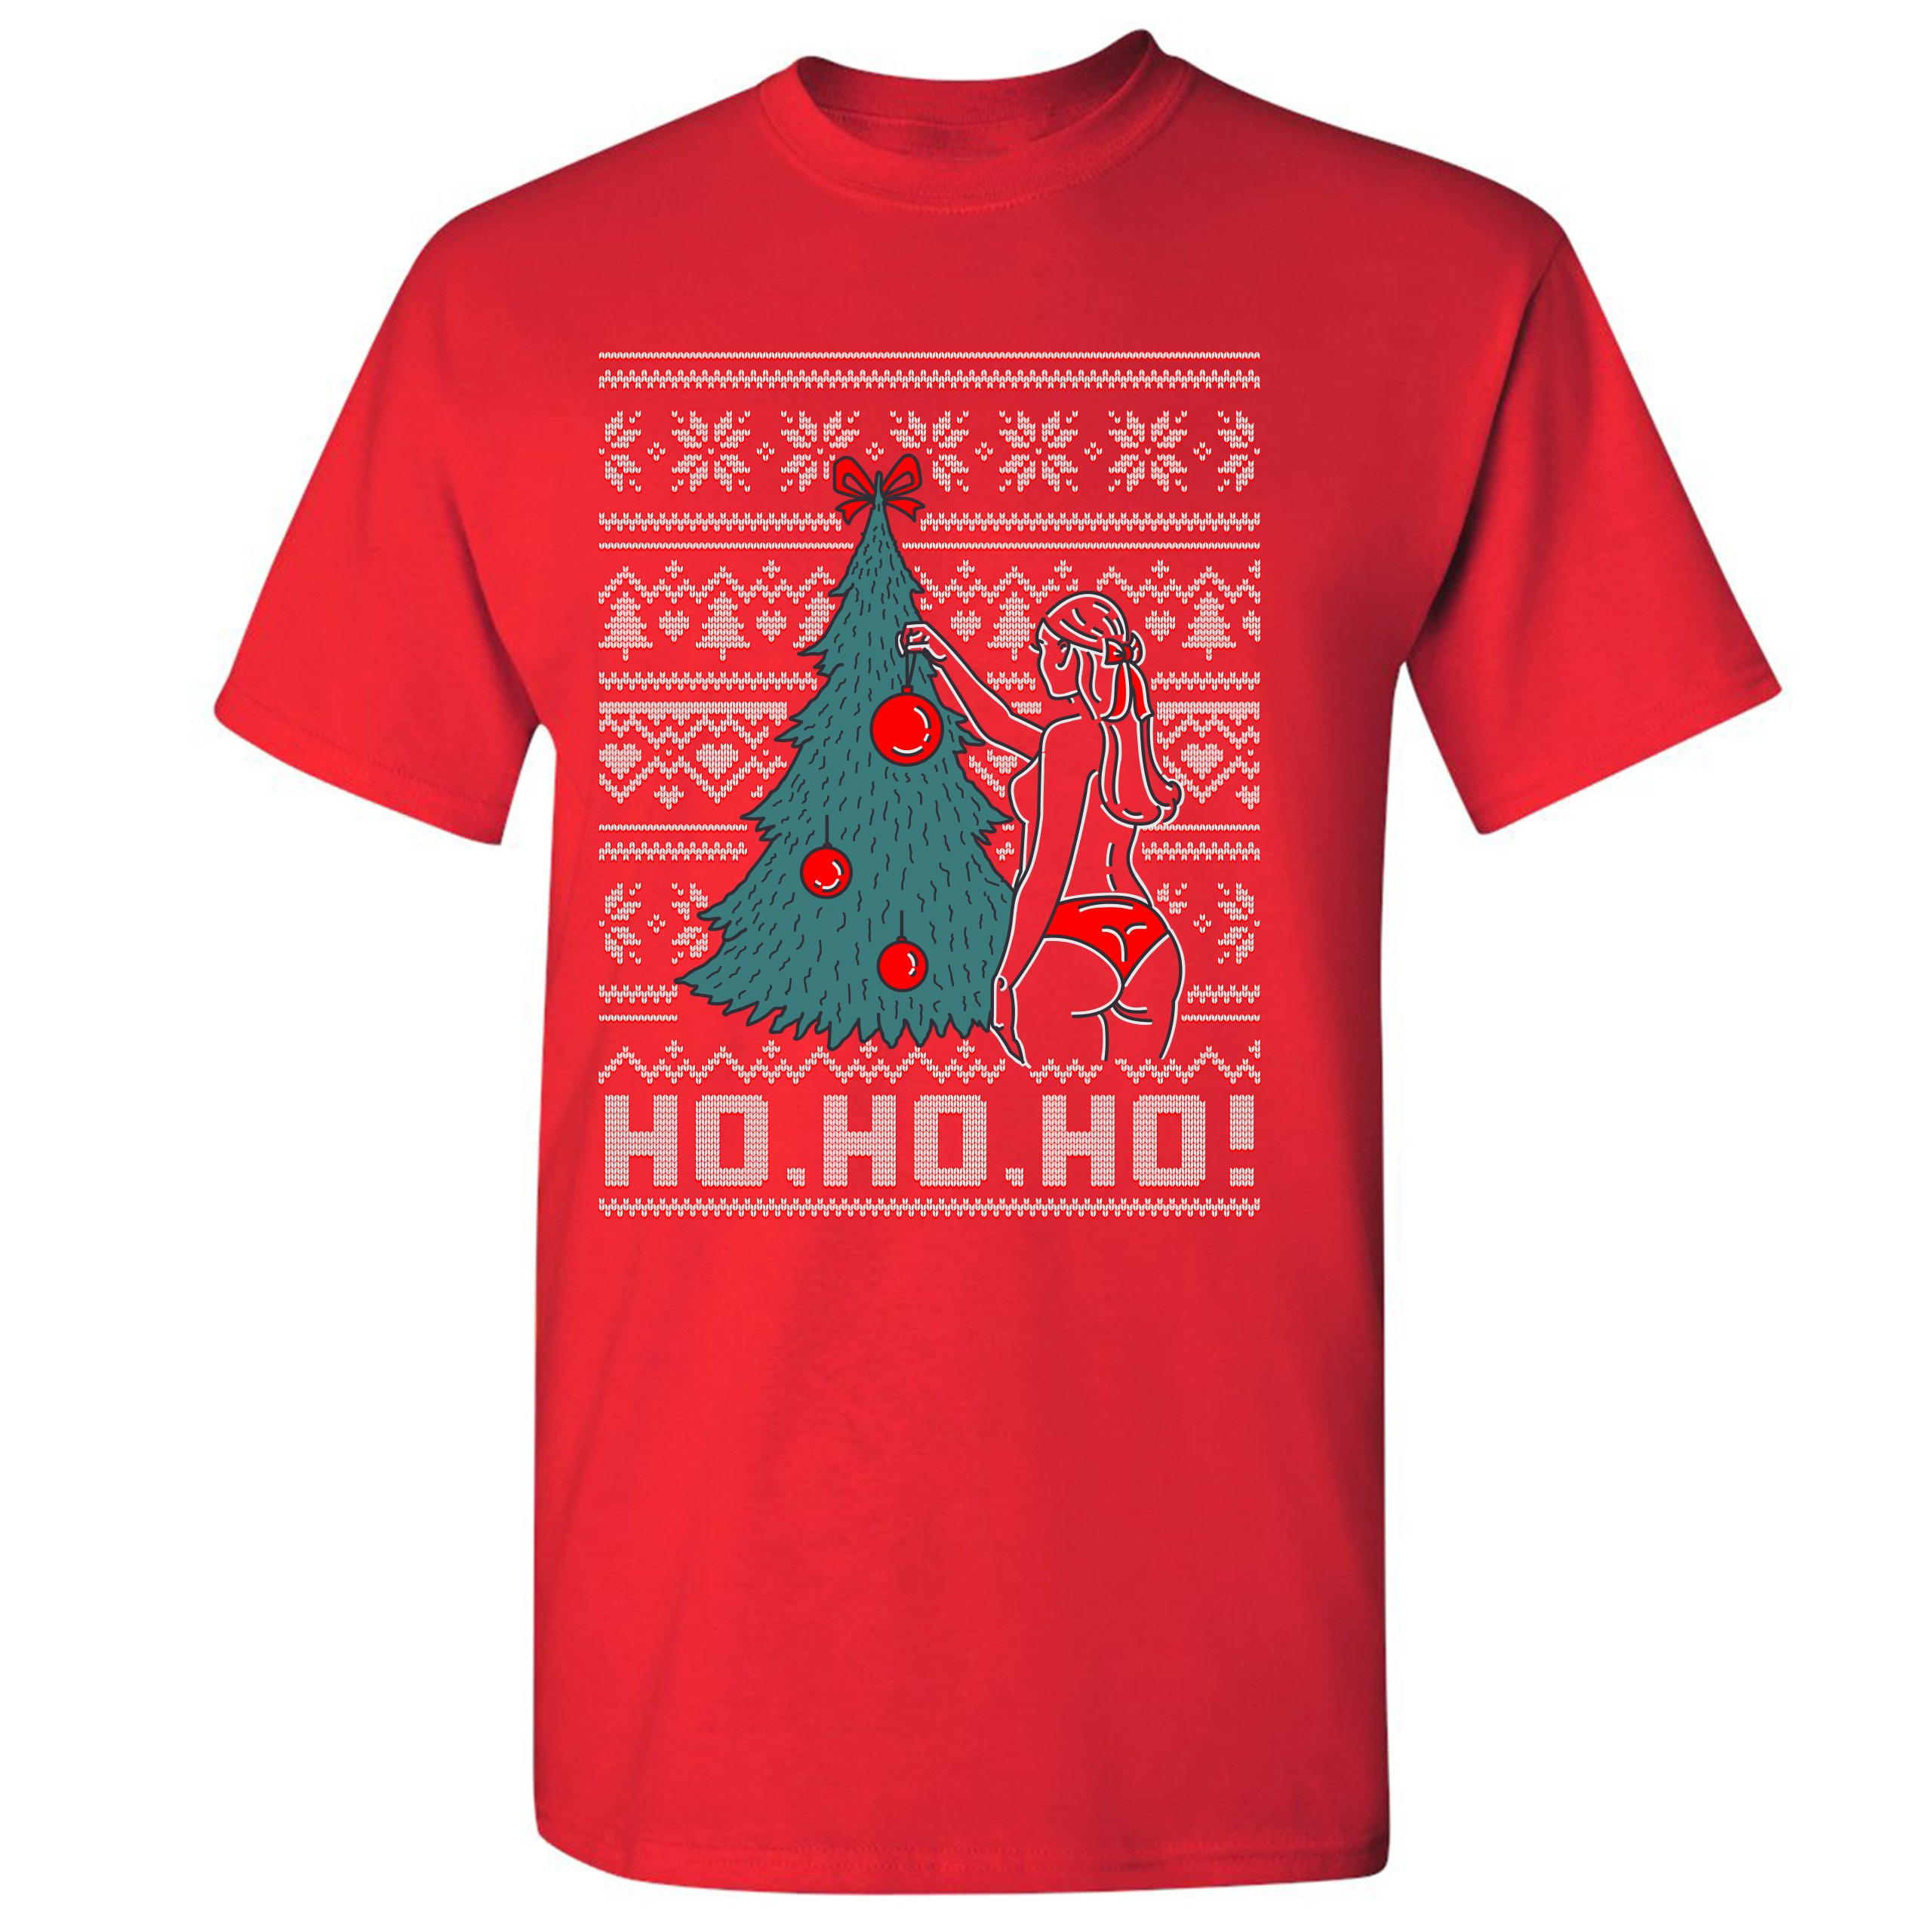 Ho ho ho! T-shirt Ugly Sweater Christmas Tree Naughty or Nice Men's Tee ...